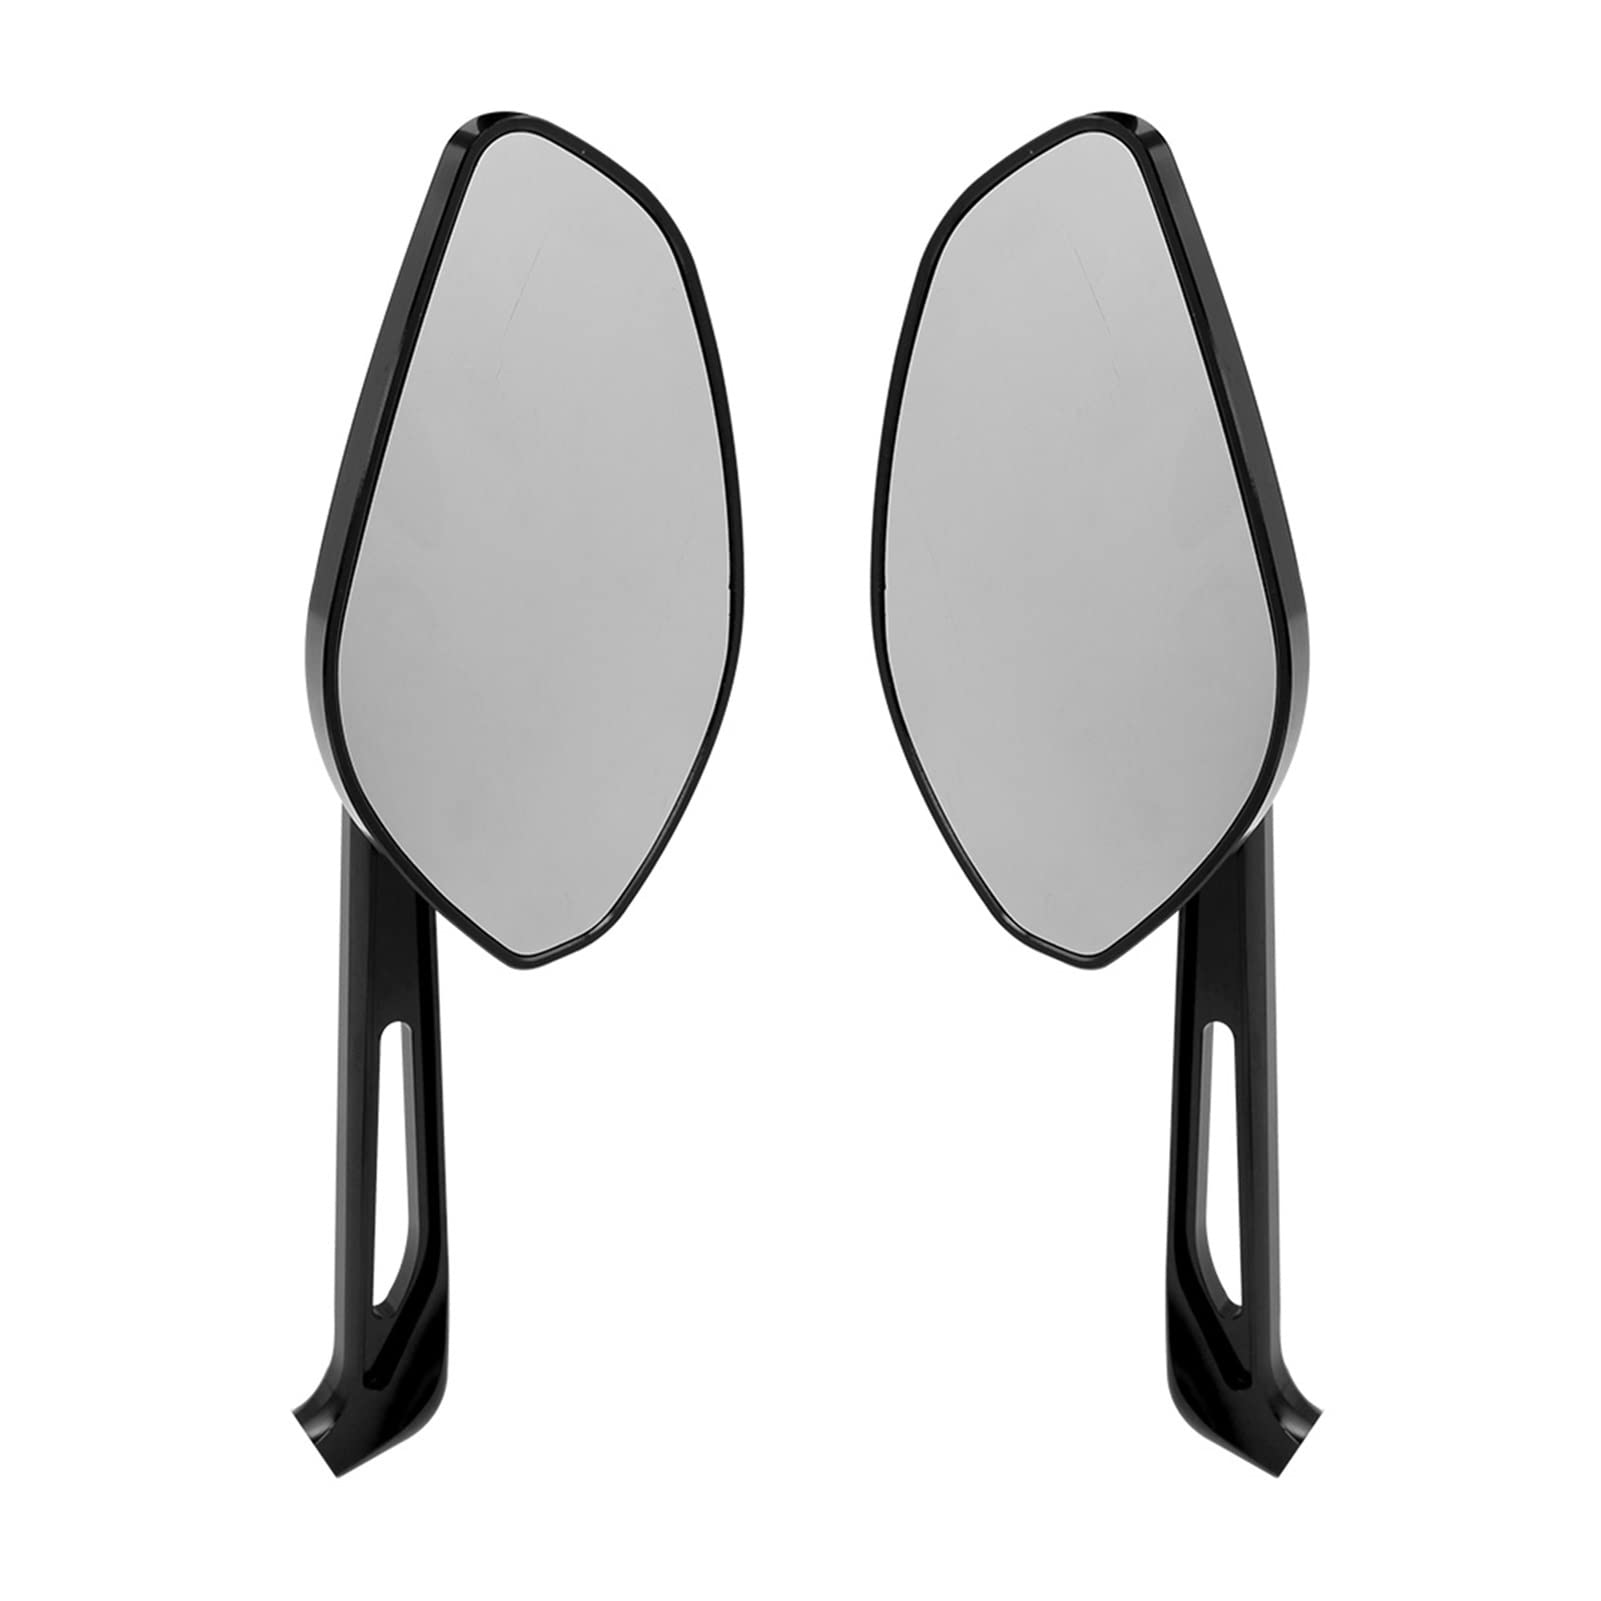 Lenker spiegel Set CNC-Aluminium-Motorrad-Rückspiegel Für D&UCATI D&iavel/D&iavel C&arbon/D&iavel T&itaninm von OGRAFF